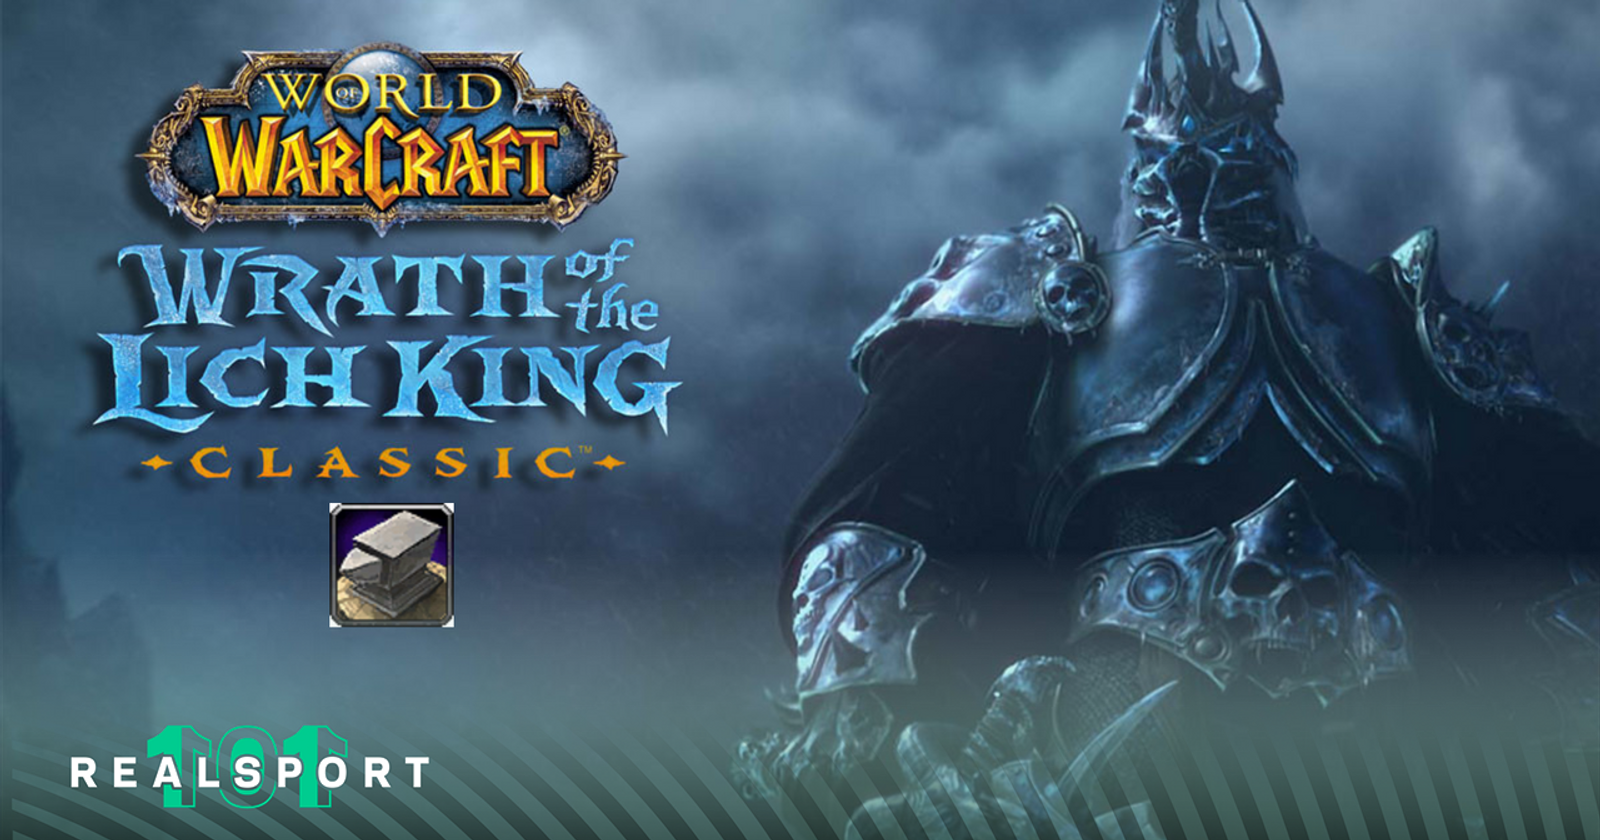 Fel-Chain Leggings - Item - World of Warcraft